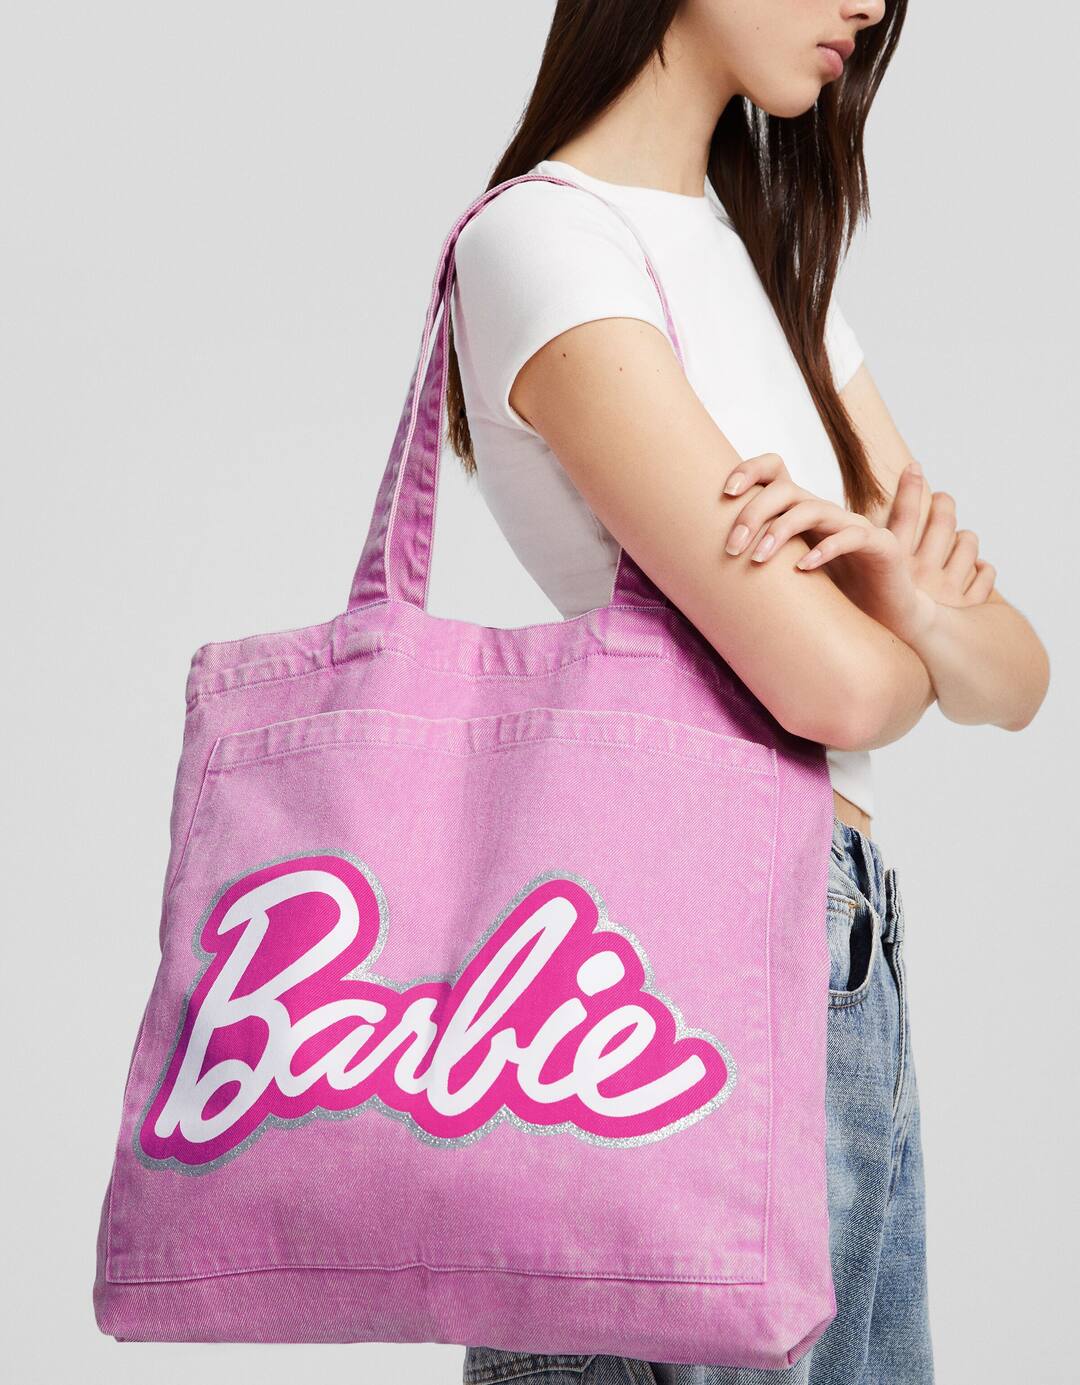 Barbie-ს საყიდლების ჩანთა